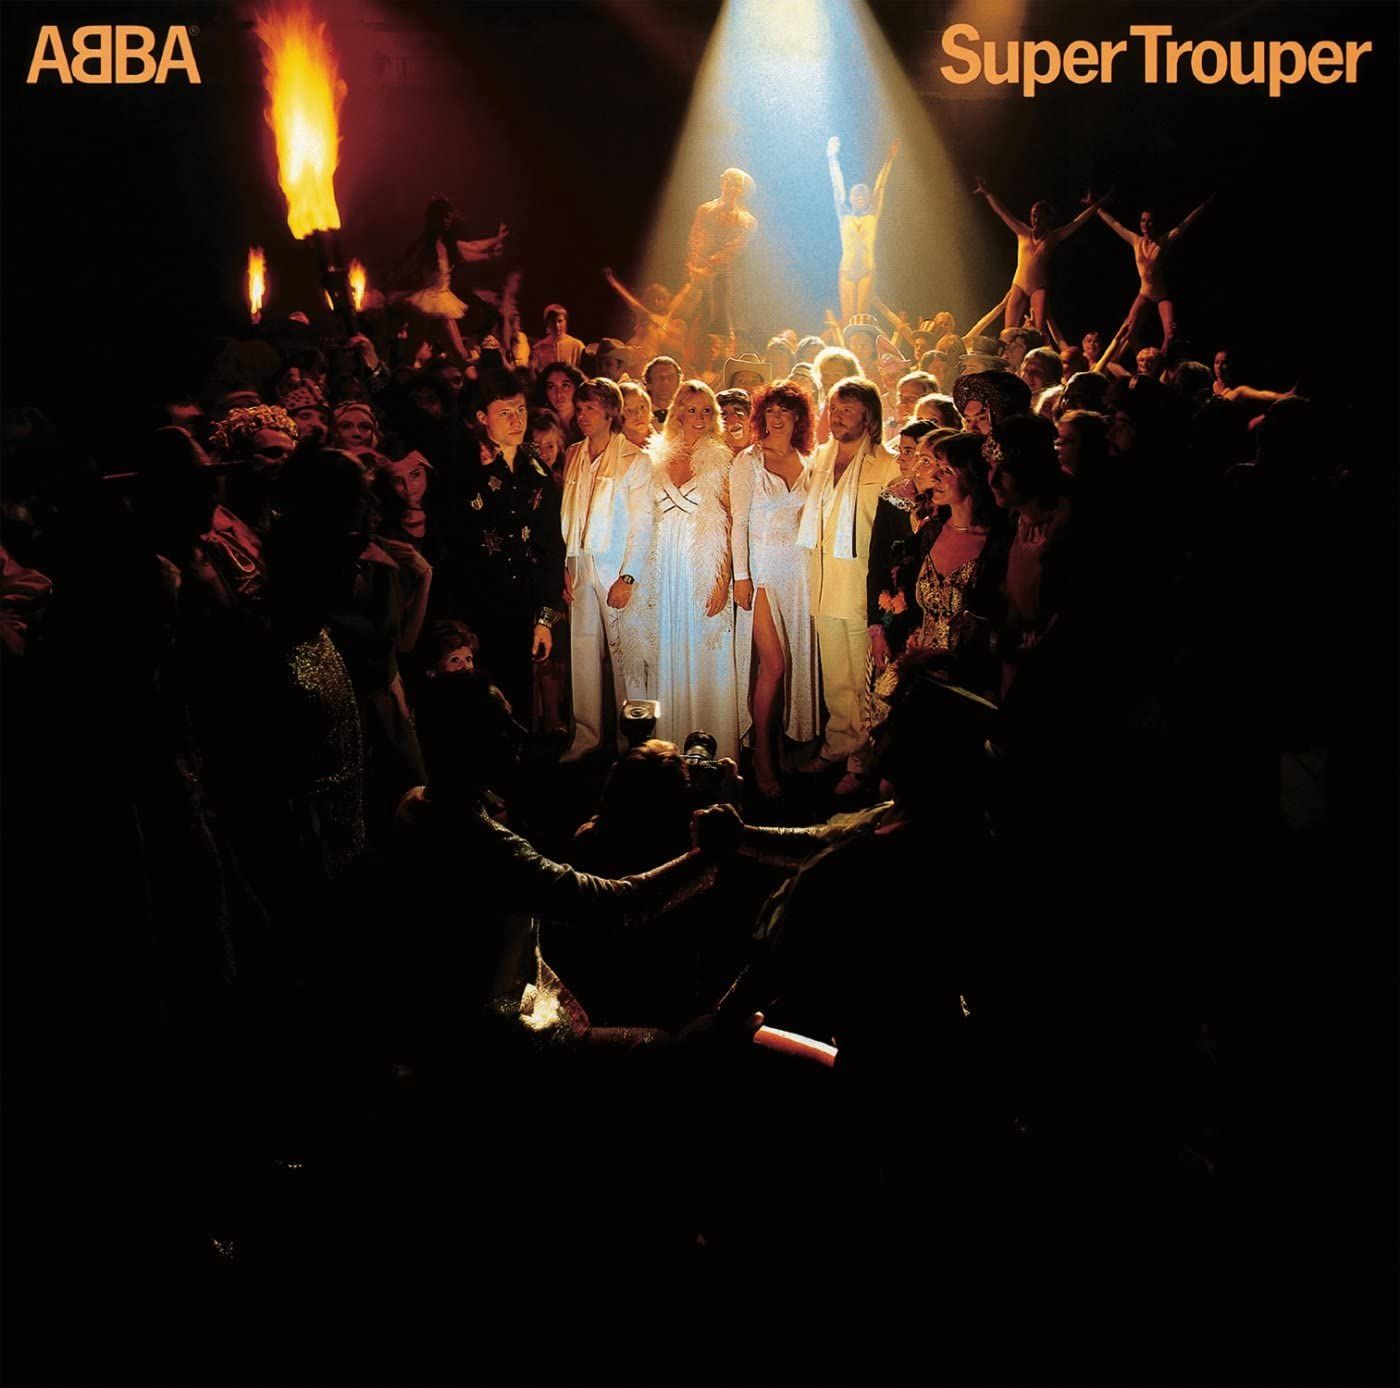 Recenzja albumu ABBA ─ Super Trouper w serwisie ArtRock.pl